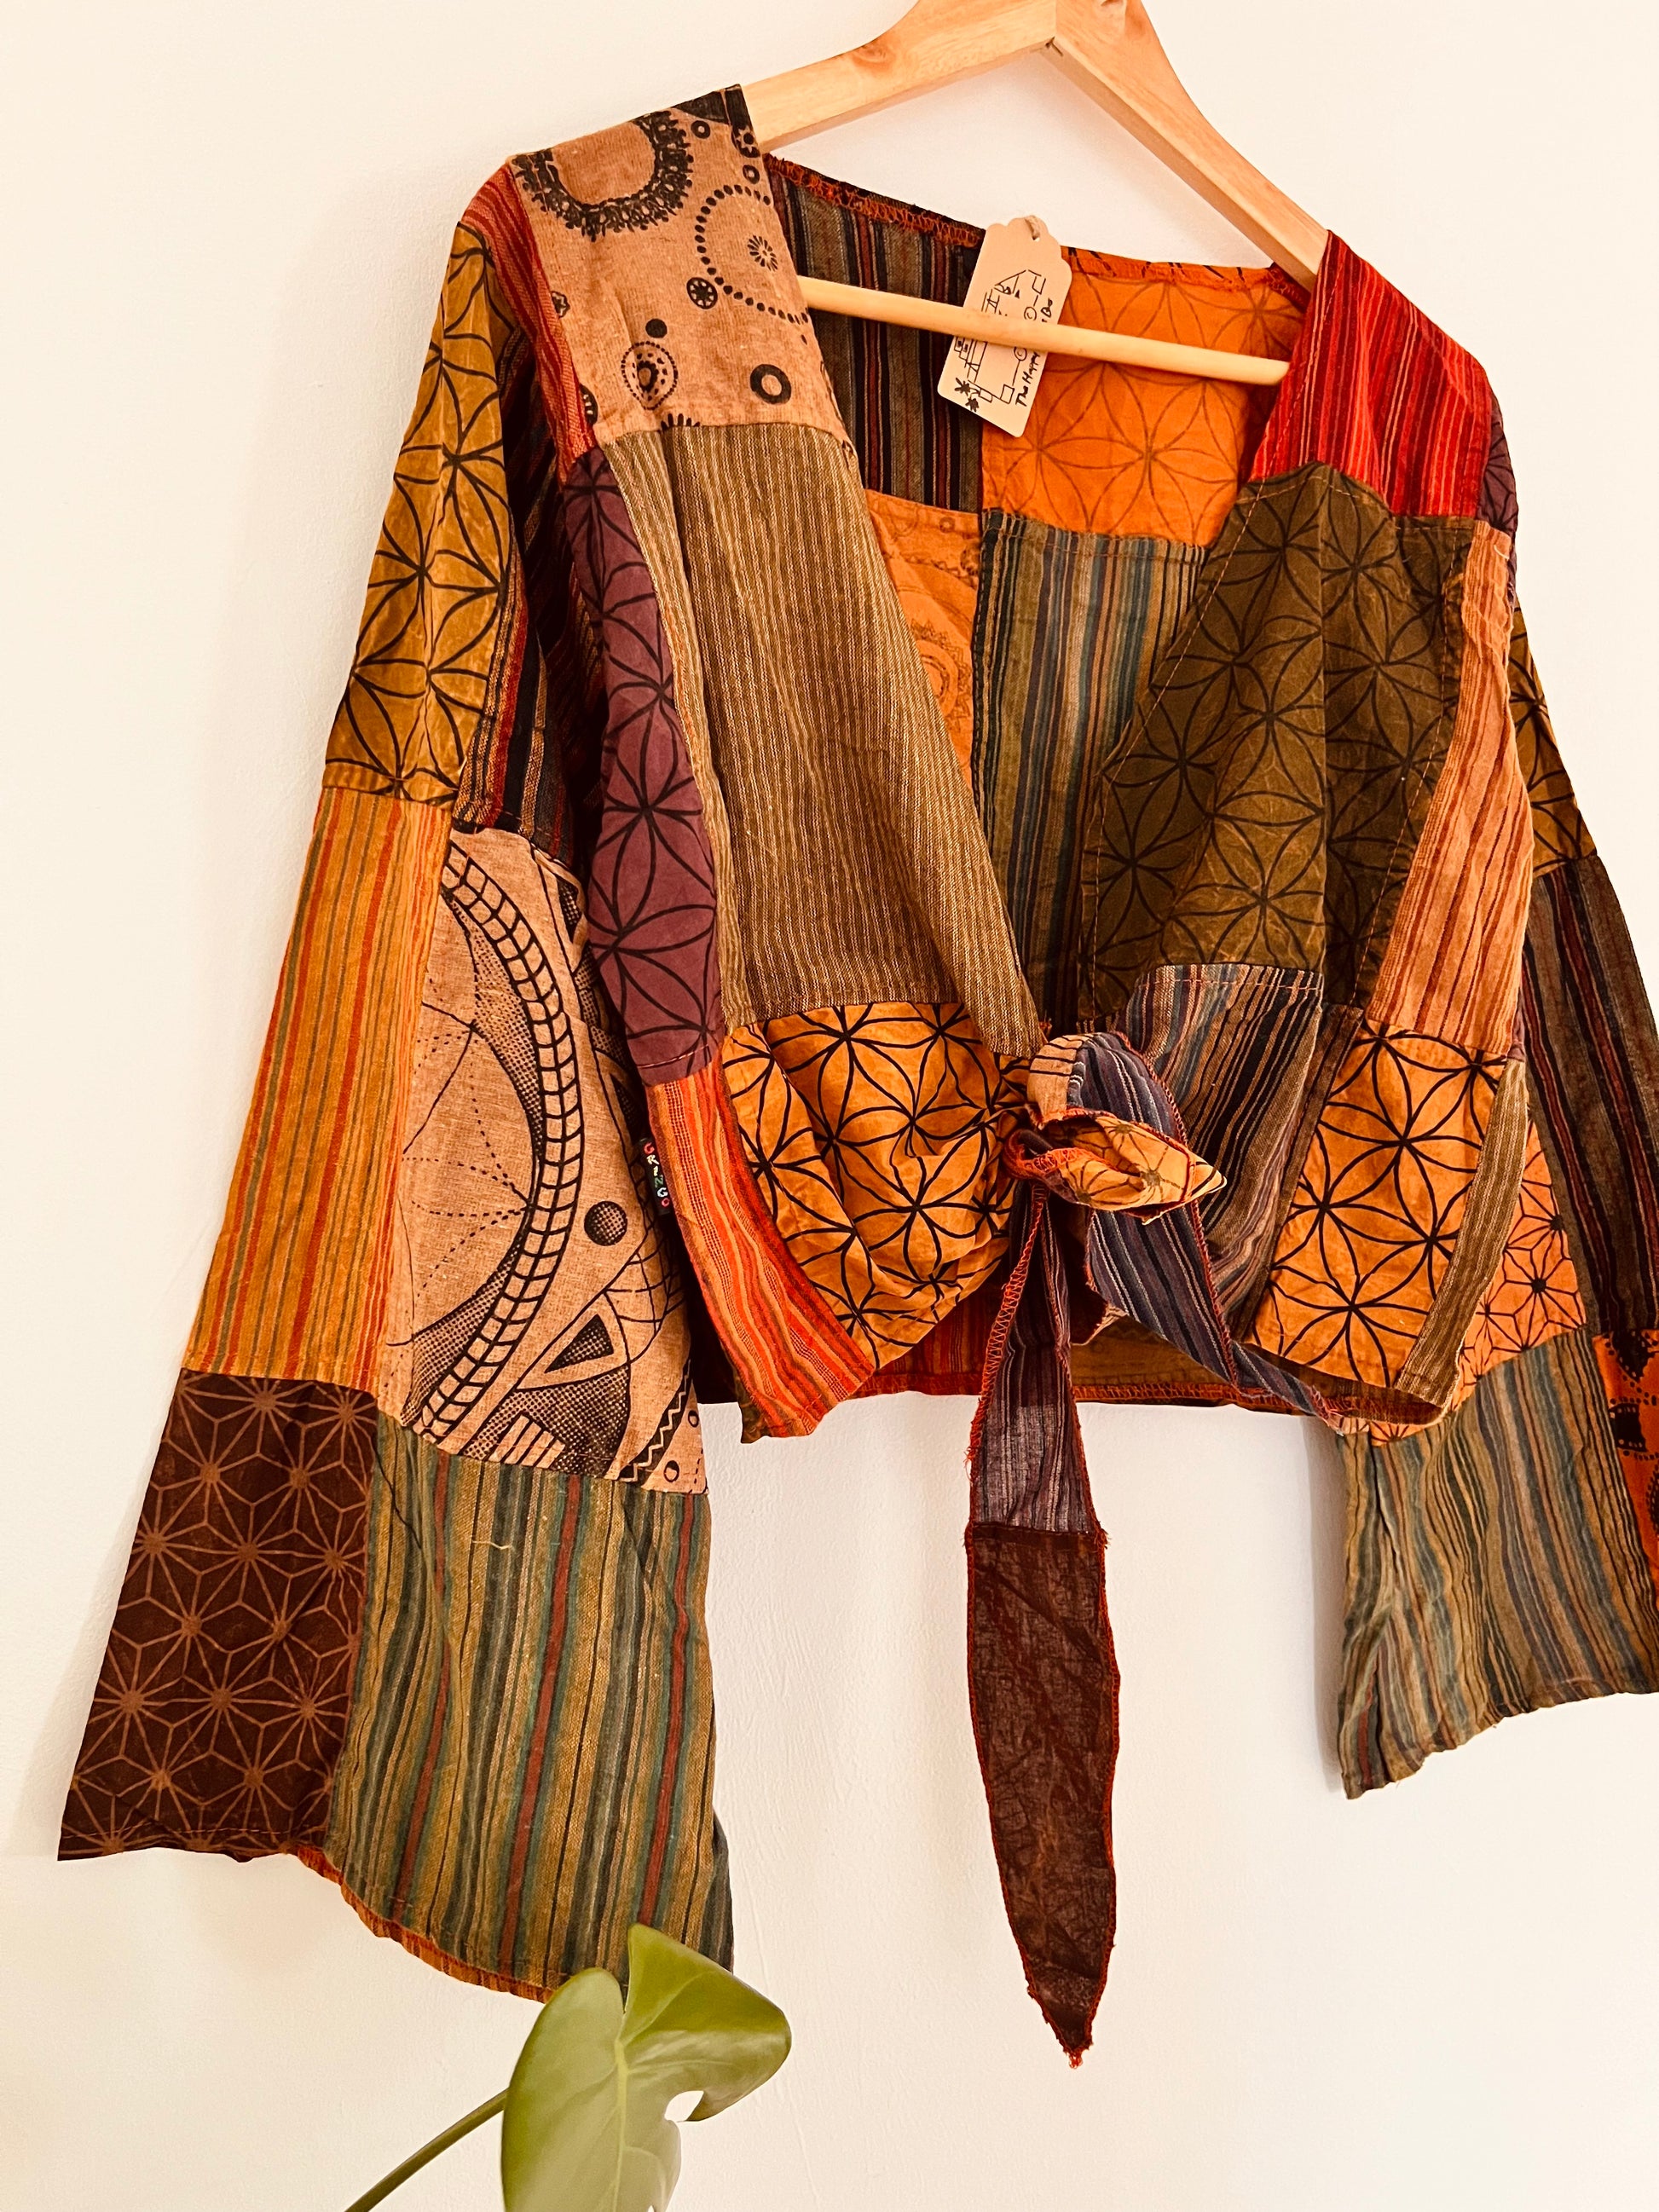 Handmade fair trade hippie boho women’s wrap cropped top trumpet bell sleeves